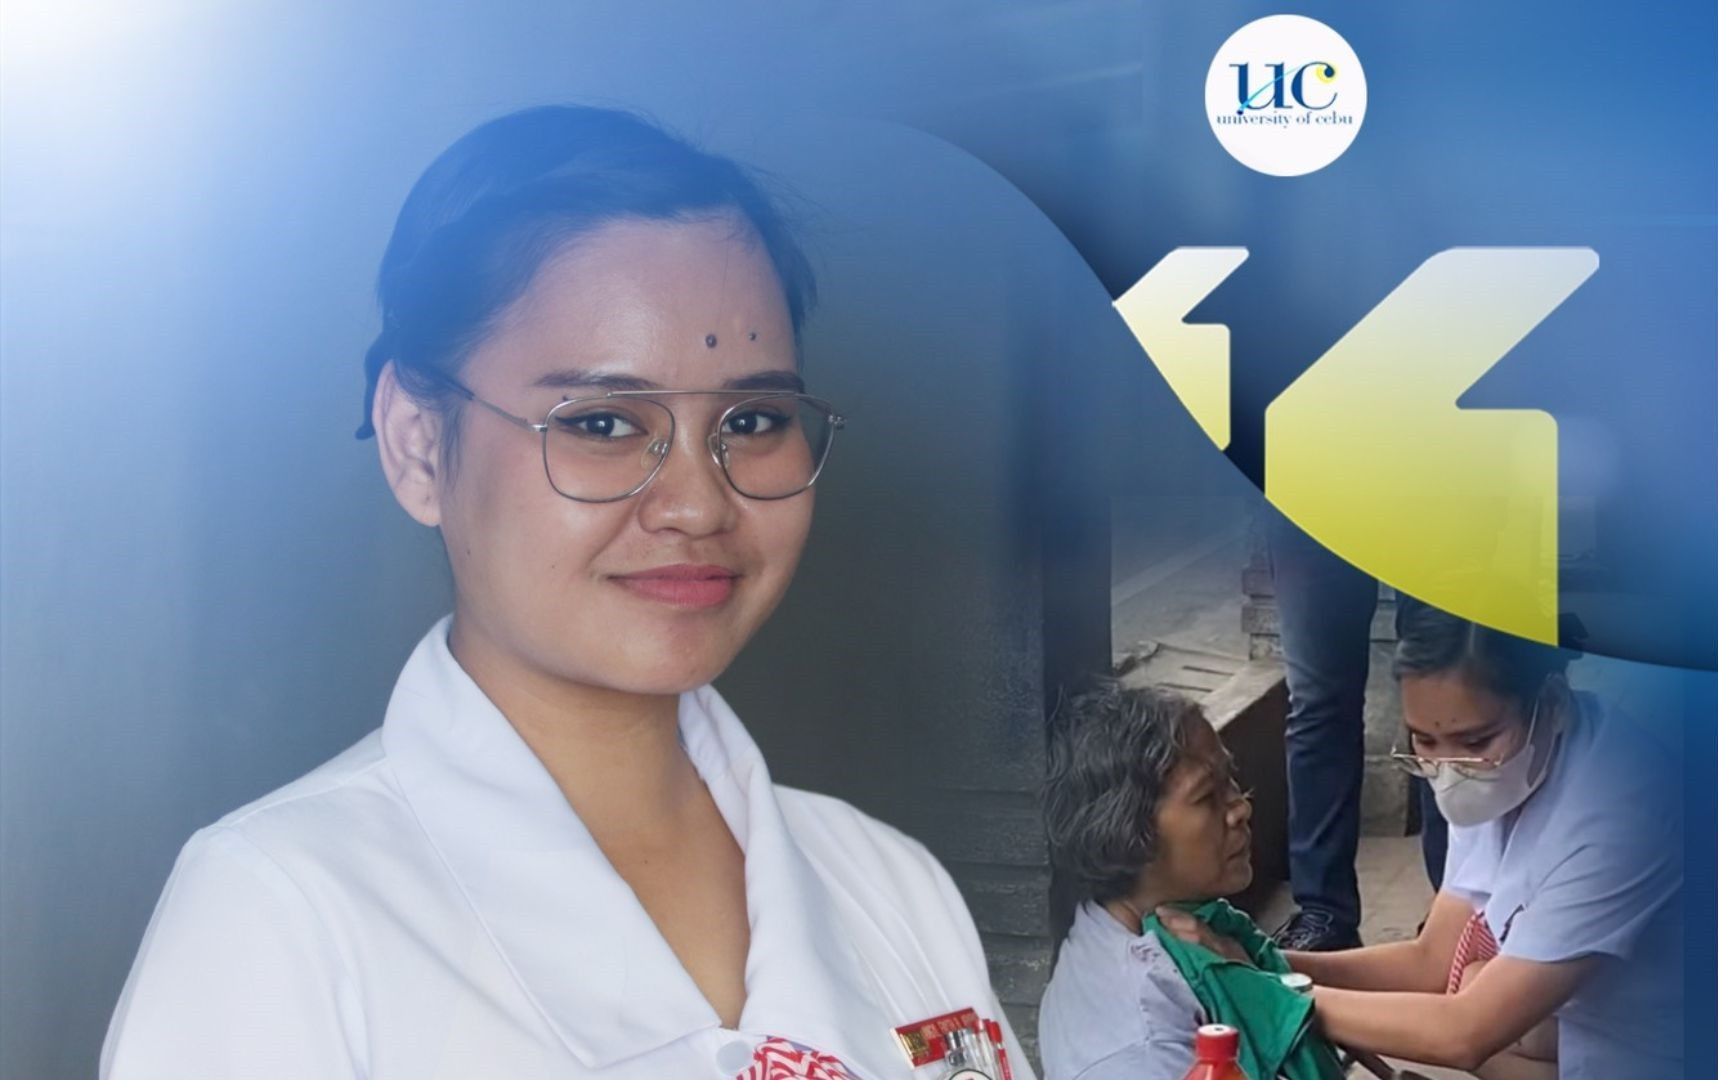 Hero Cebu nursing student to be honored for saving neck-slashing victim